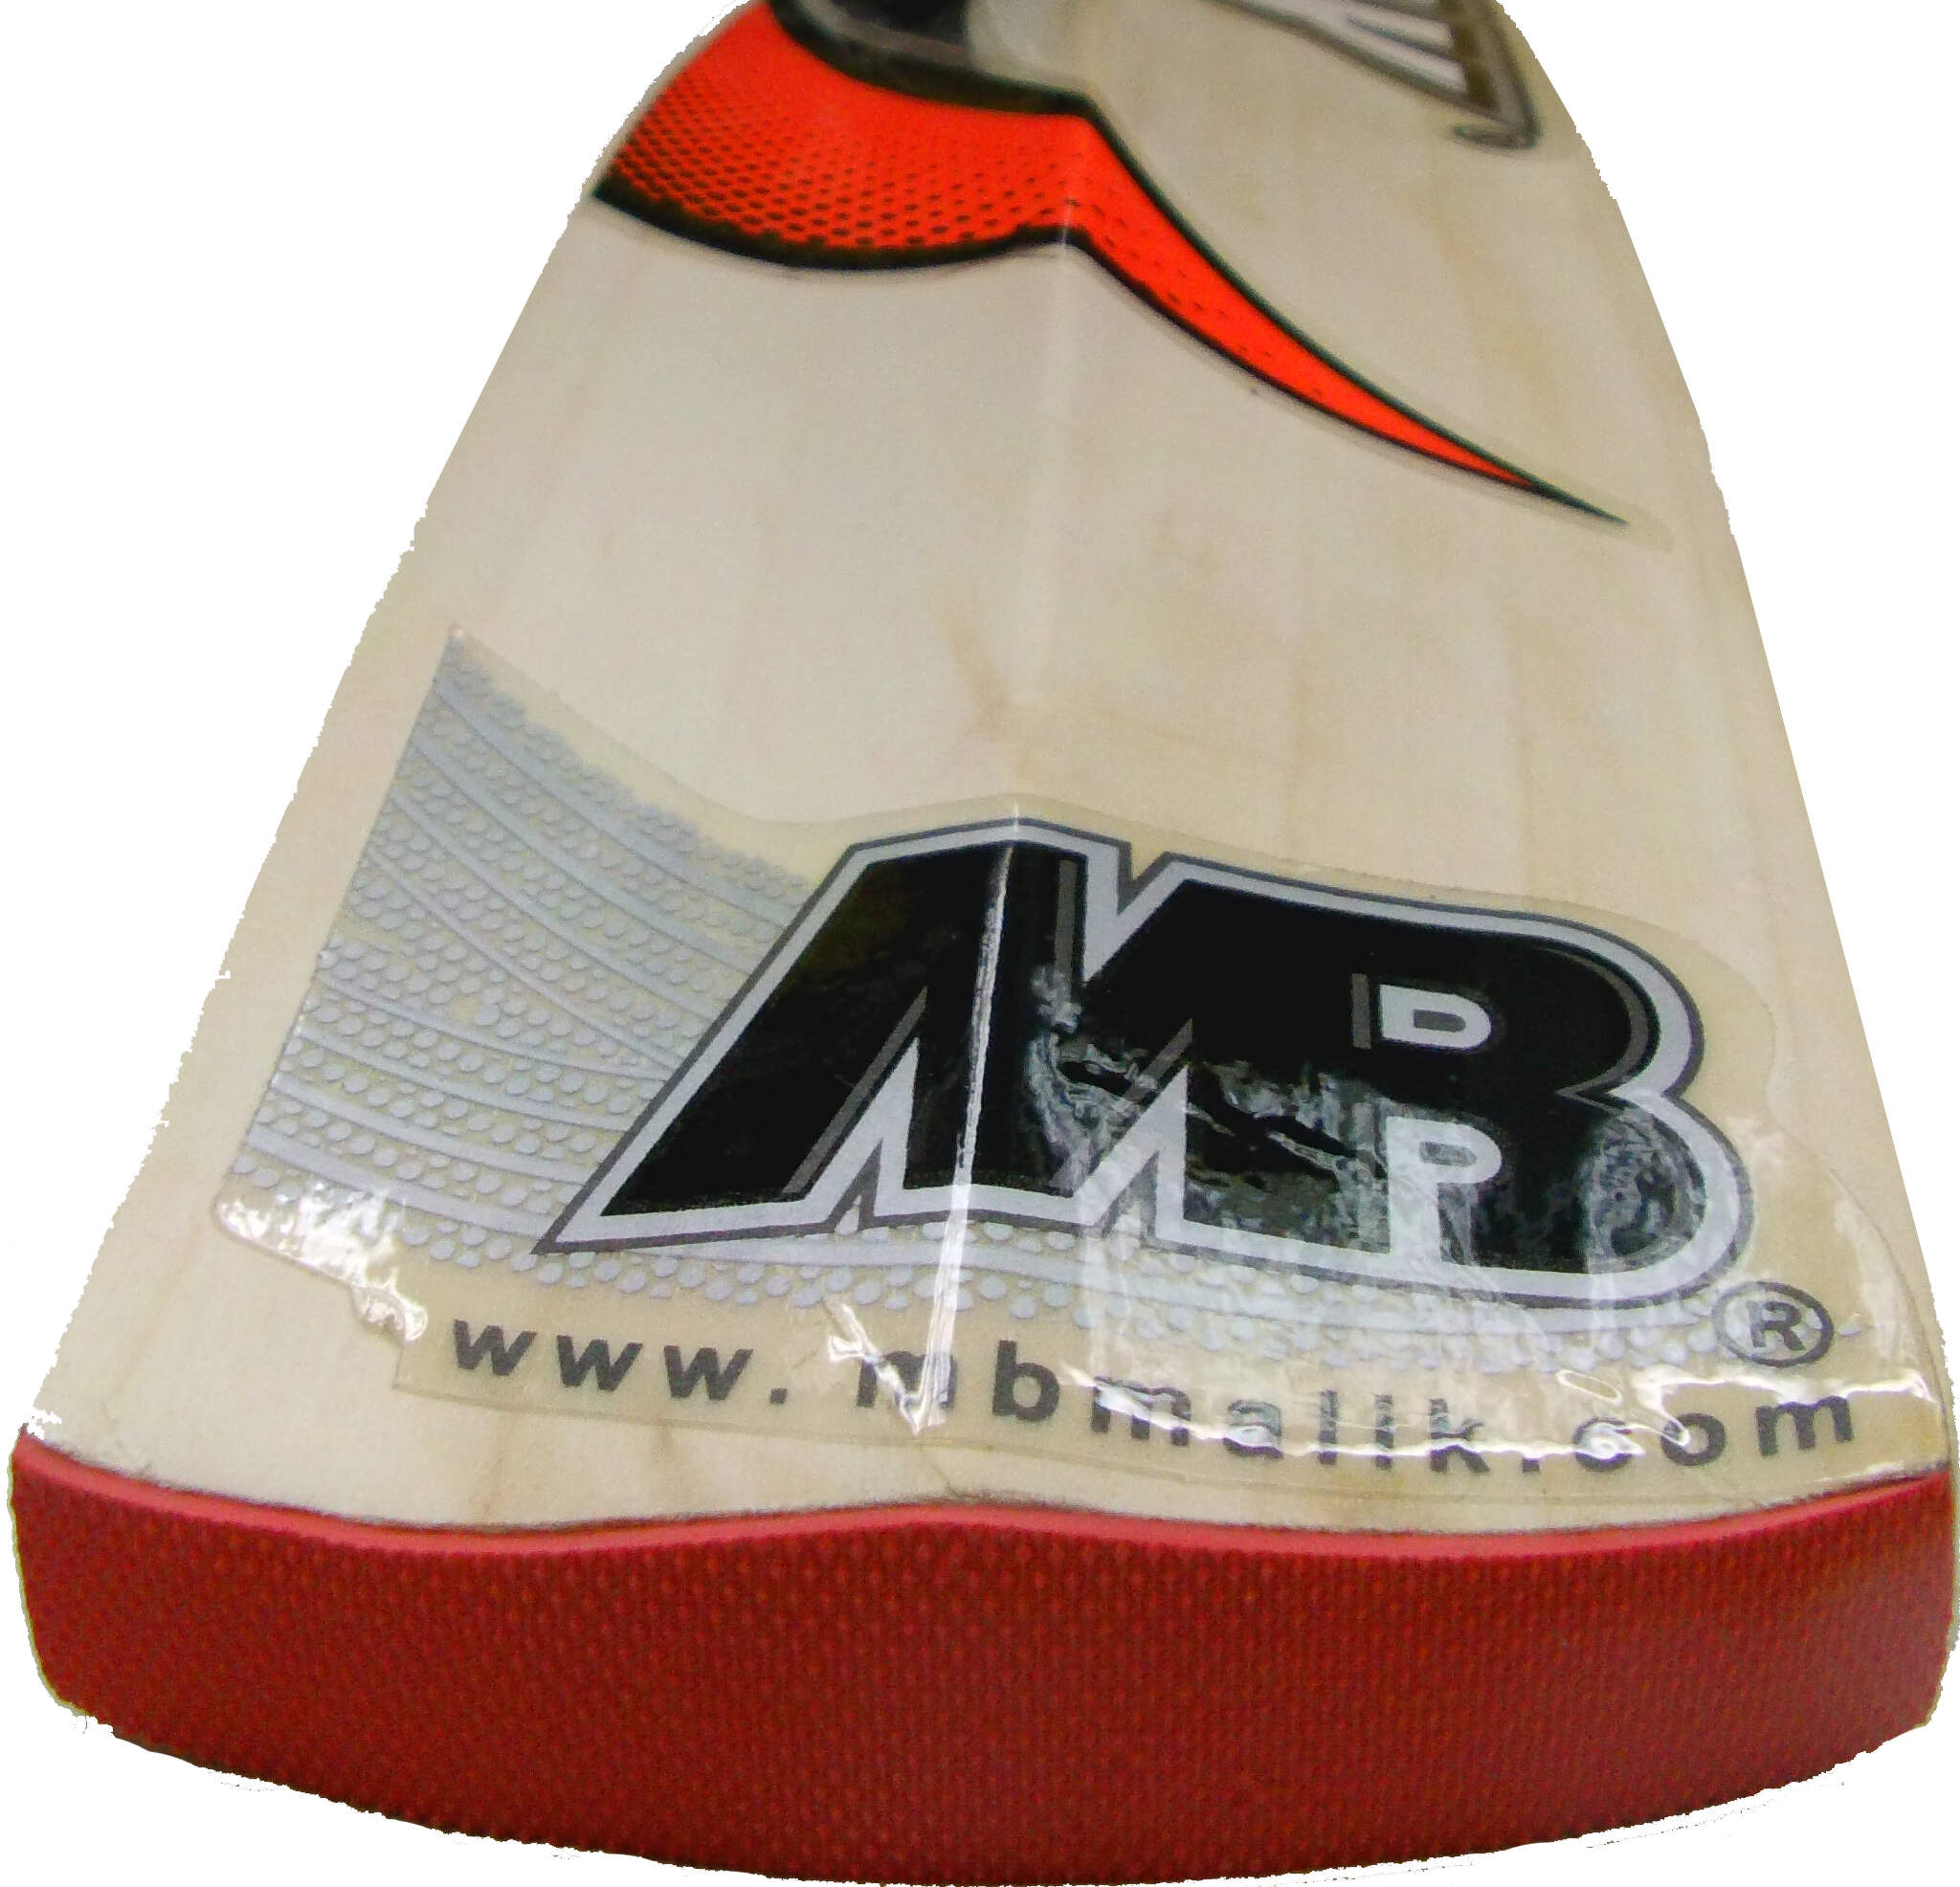 Mb Malik Monarch English Willow Cricket Bat SH 2.8 Lbs Free Bag